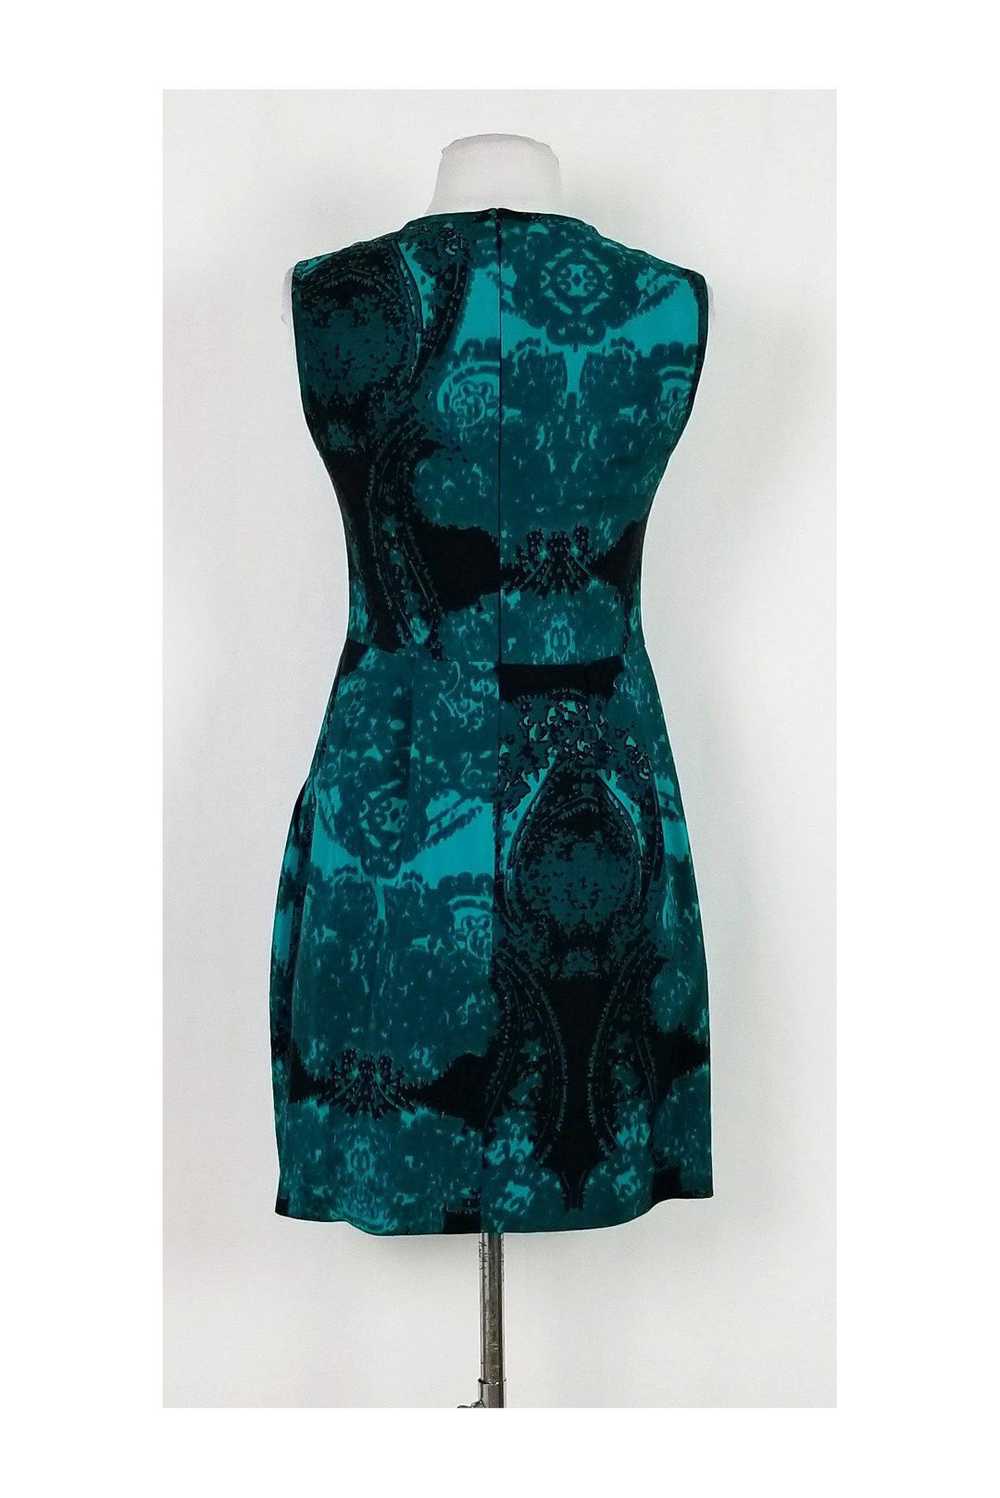 Nanette Lepore - Teal Abstract Print Dress Sz 0 - image 3